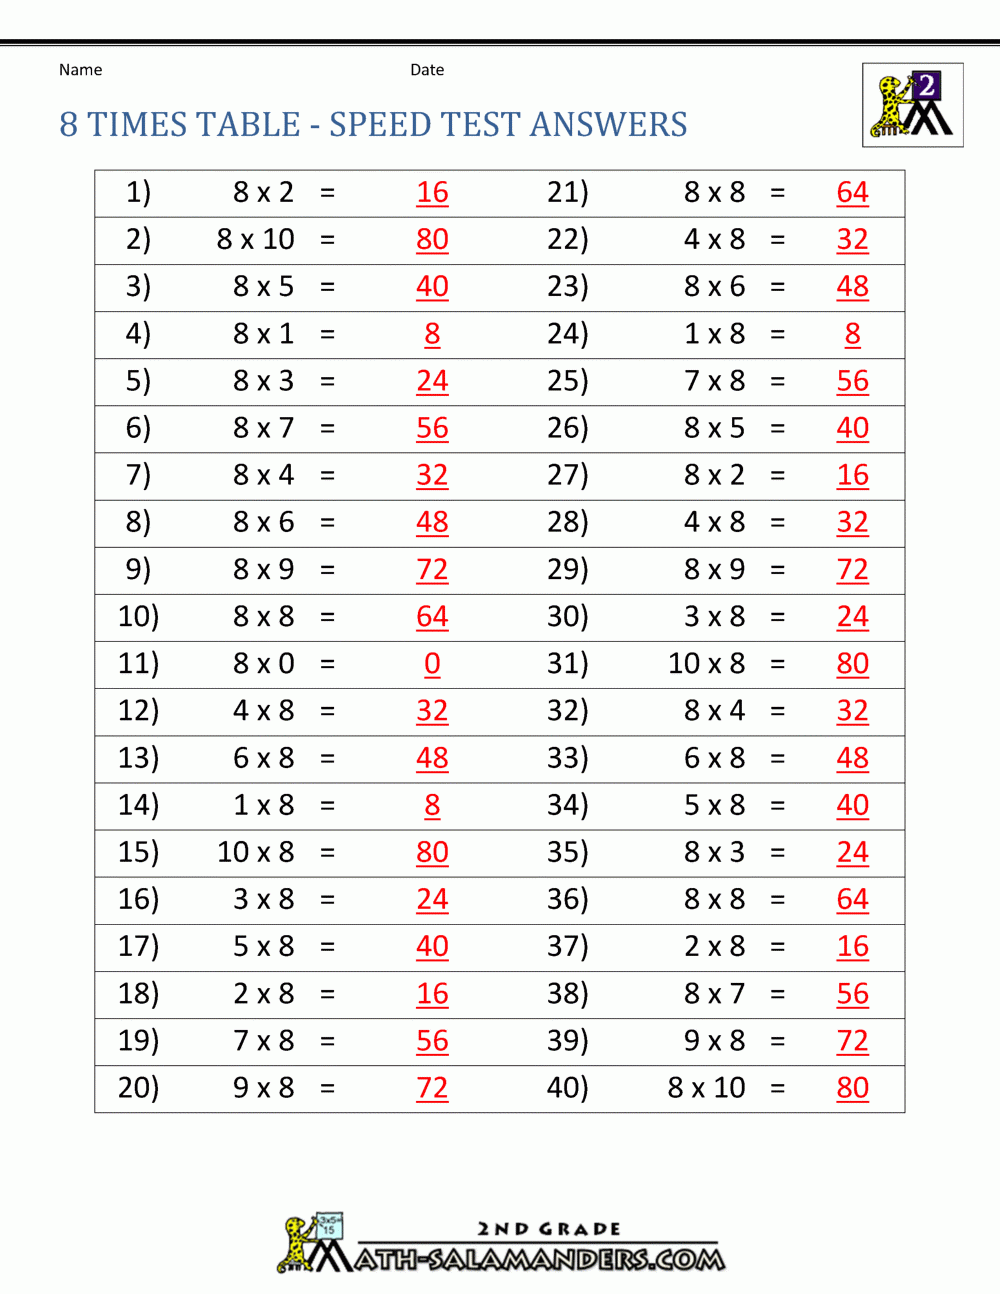 8s multiplication chart